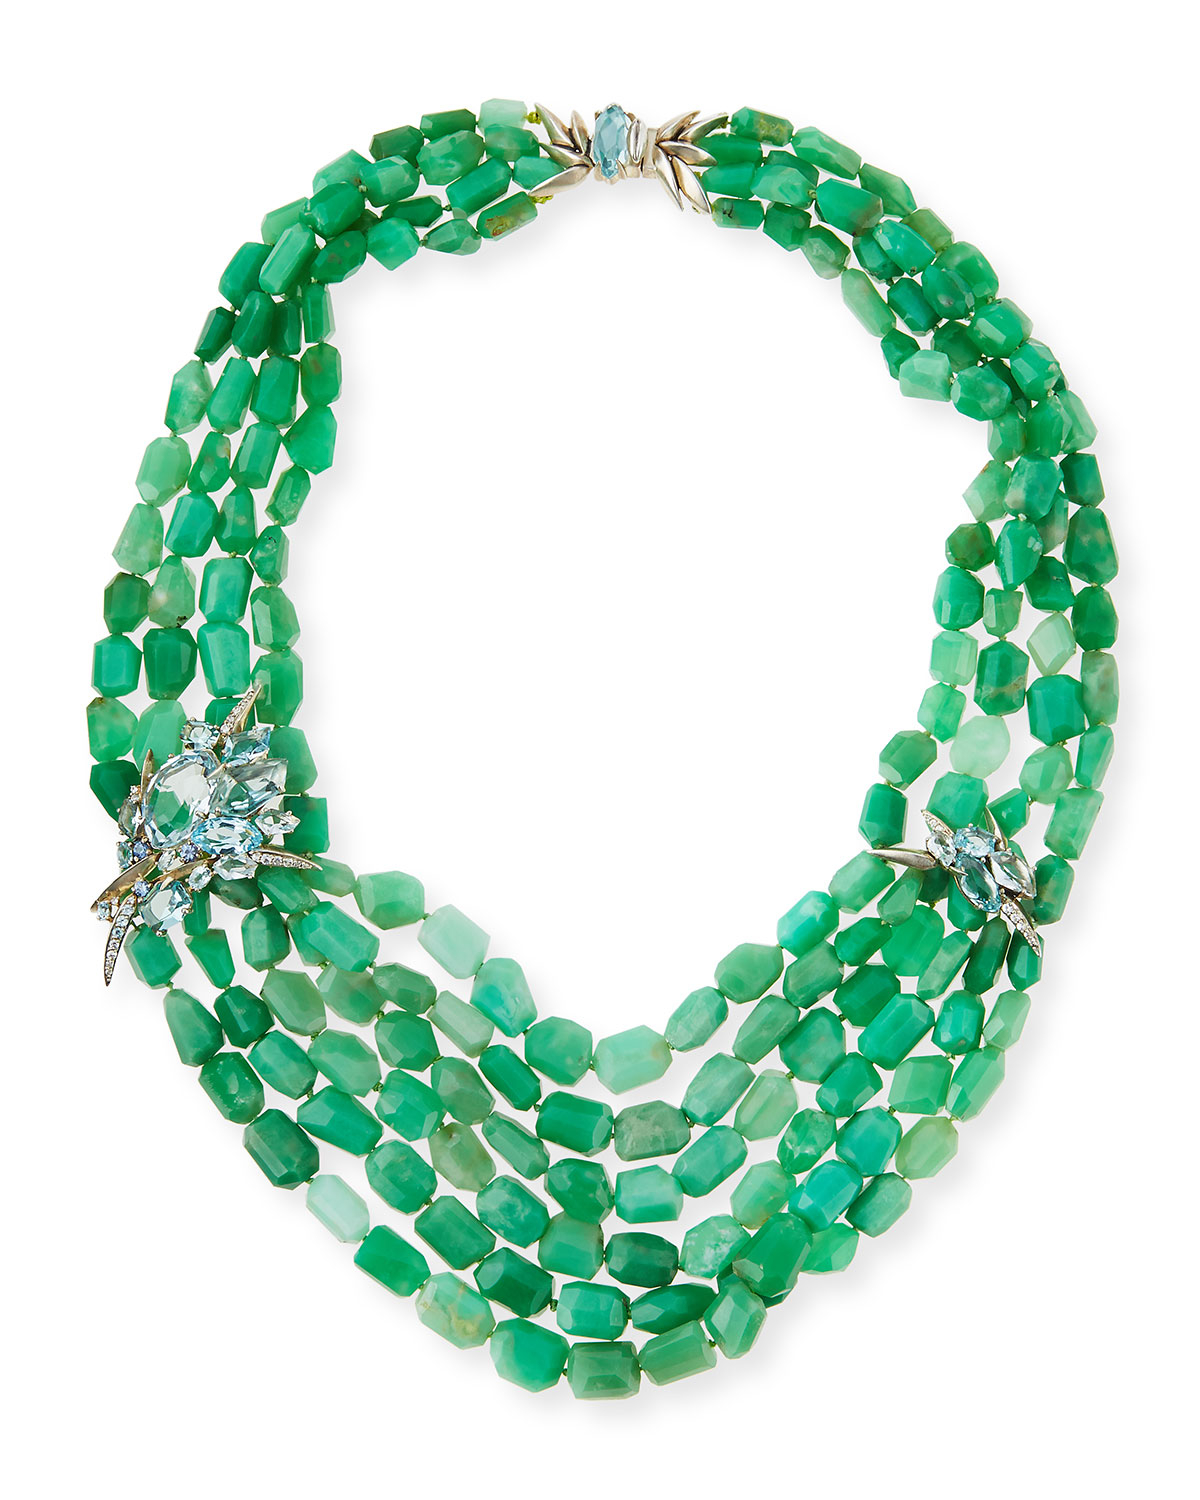 Lyst - Alexis Bittar Fine Chrysoprase Torsade Beaded Necklace in Green